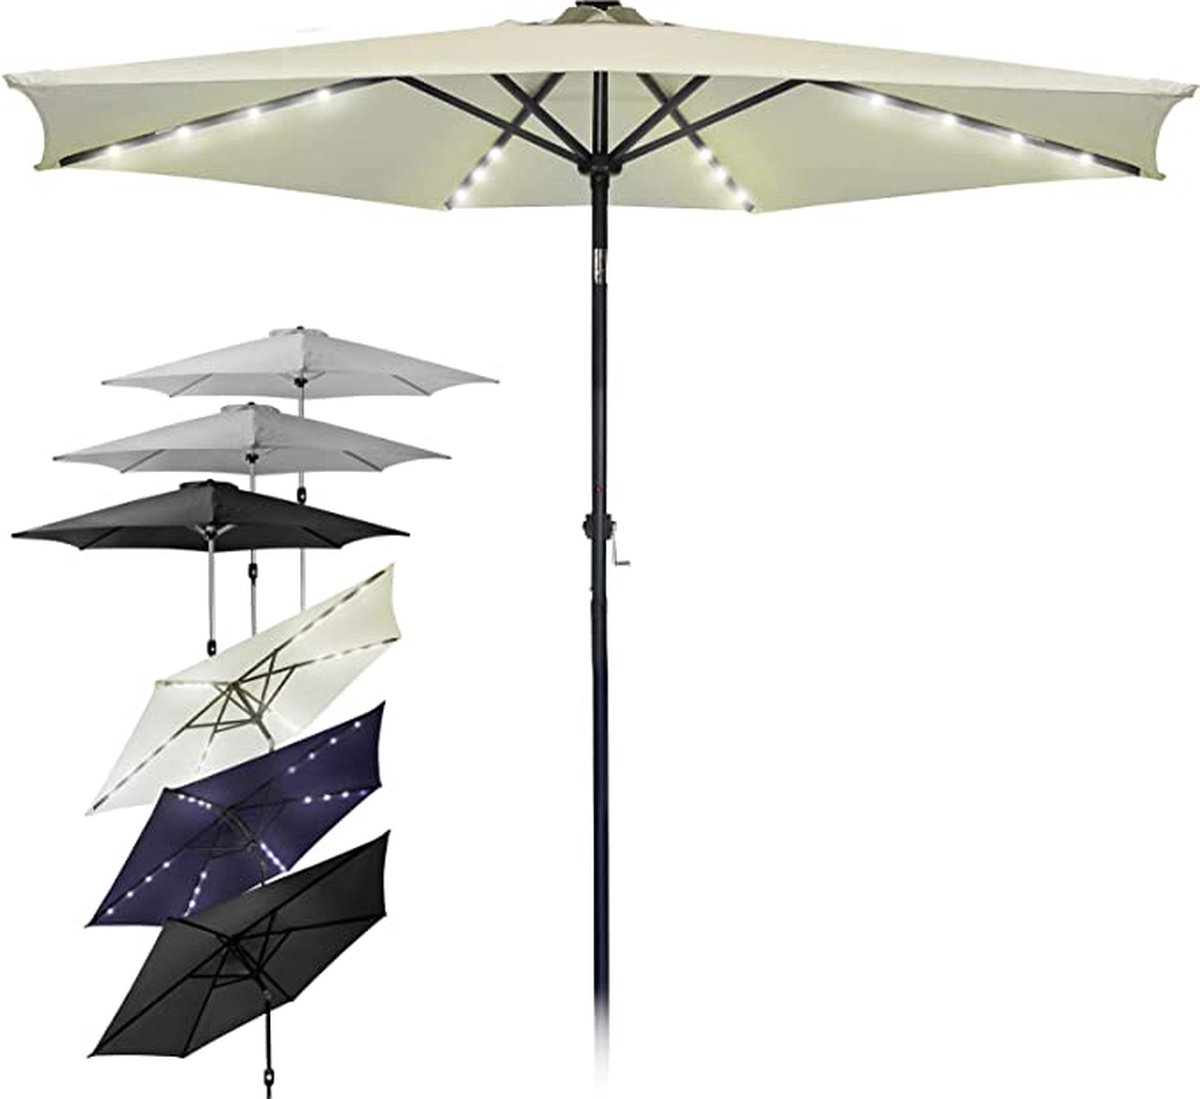 Parasol met verlichting - Tuinparasol - Stokparasol - Handslinger - 270 cm - Beige